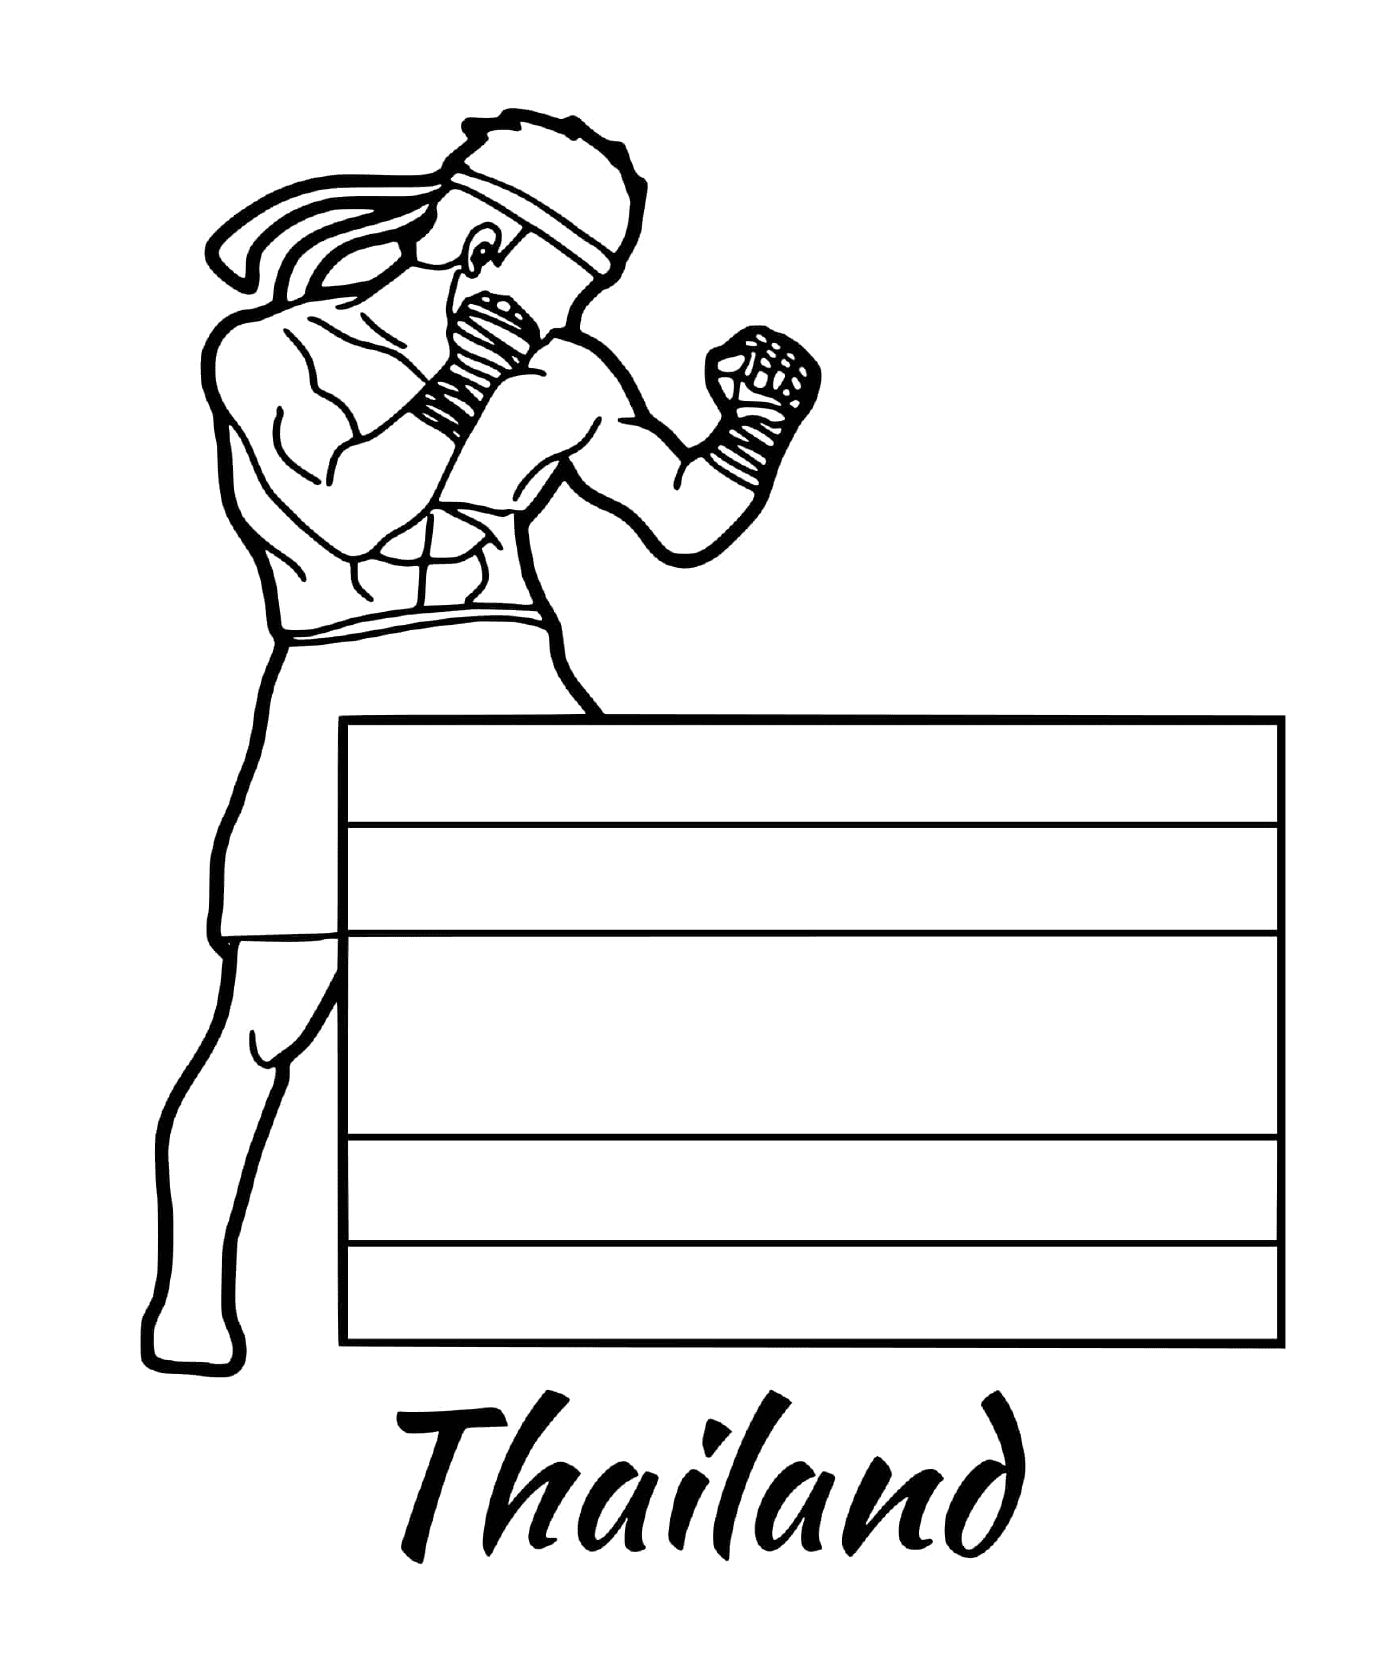  Flag of Thailand, Muay Thai 